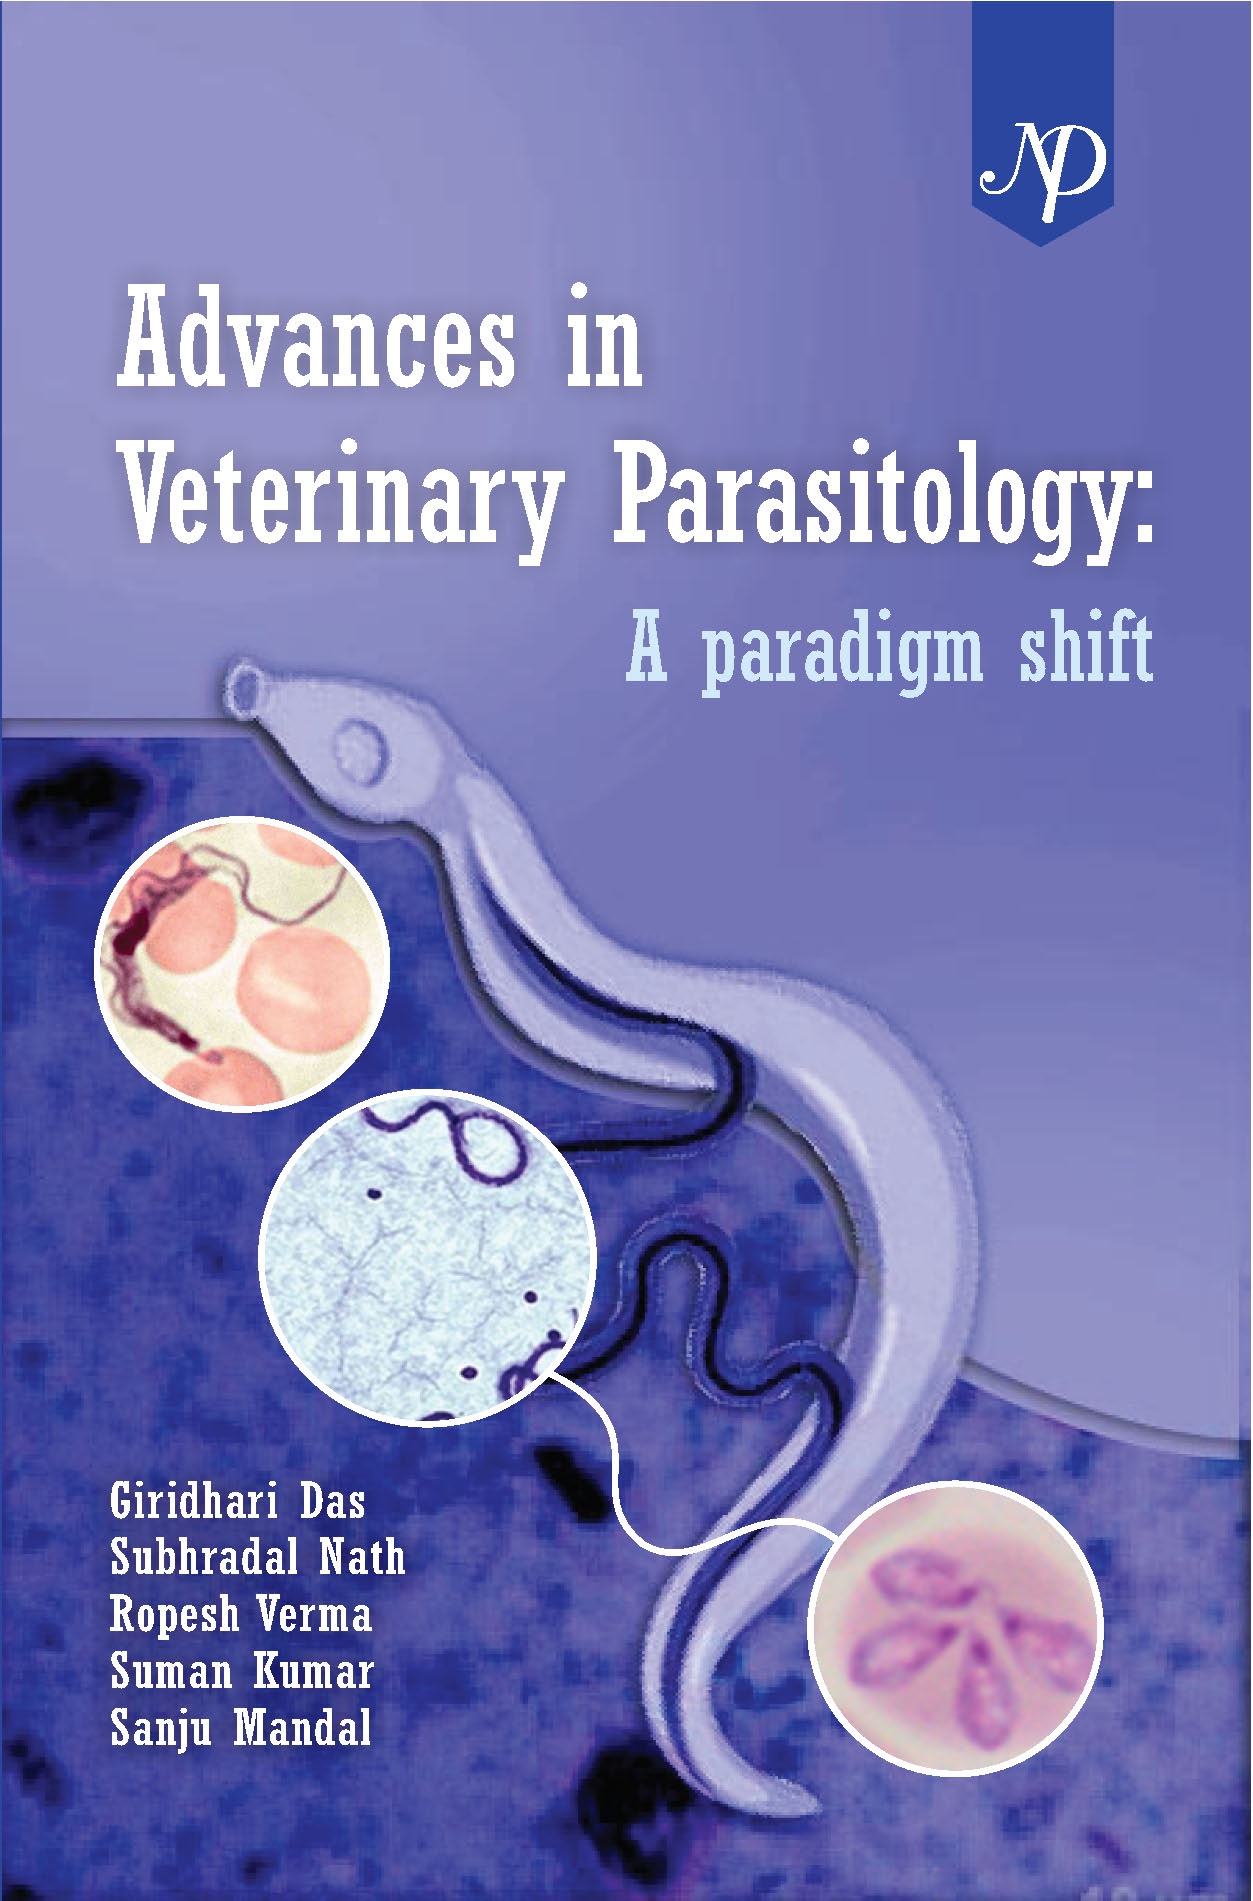 Advances in Veterinary Parasitology: A paradigm shift